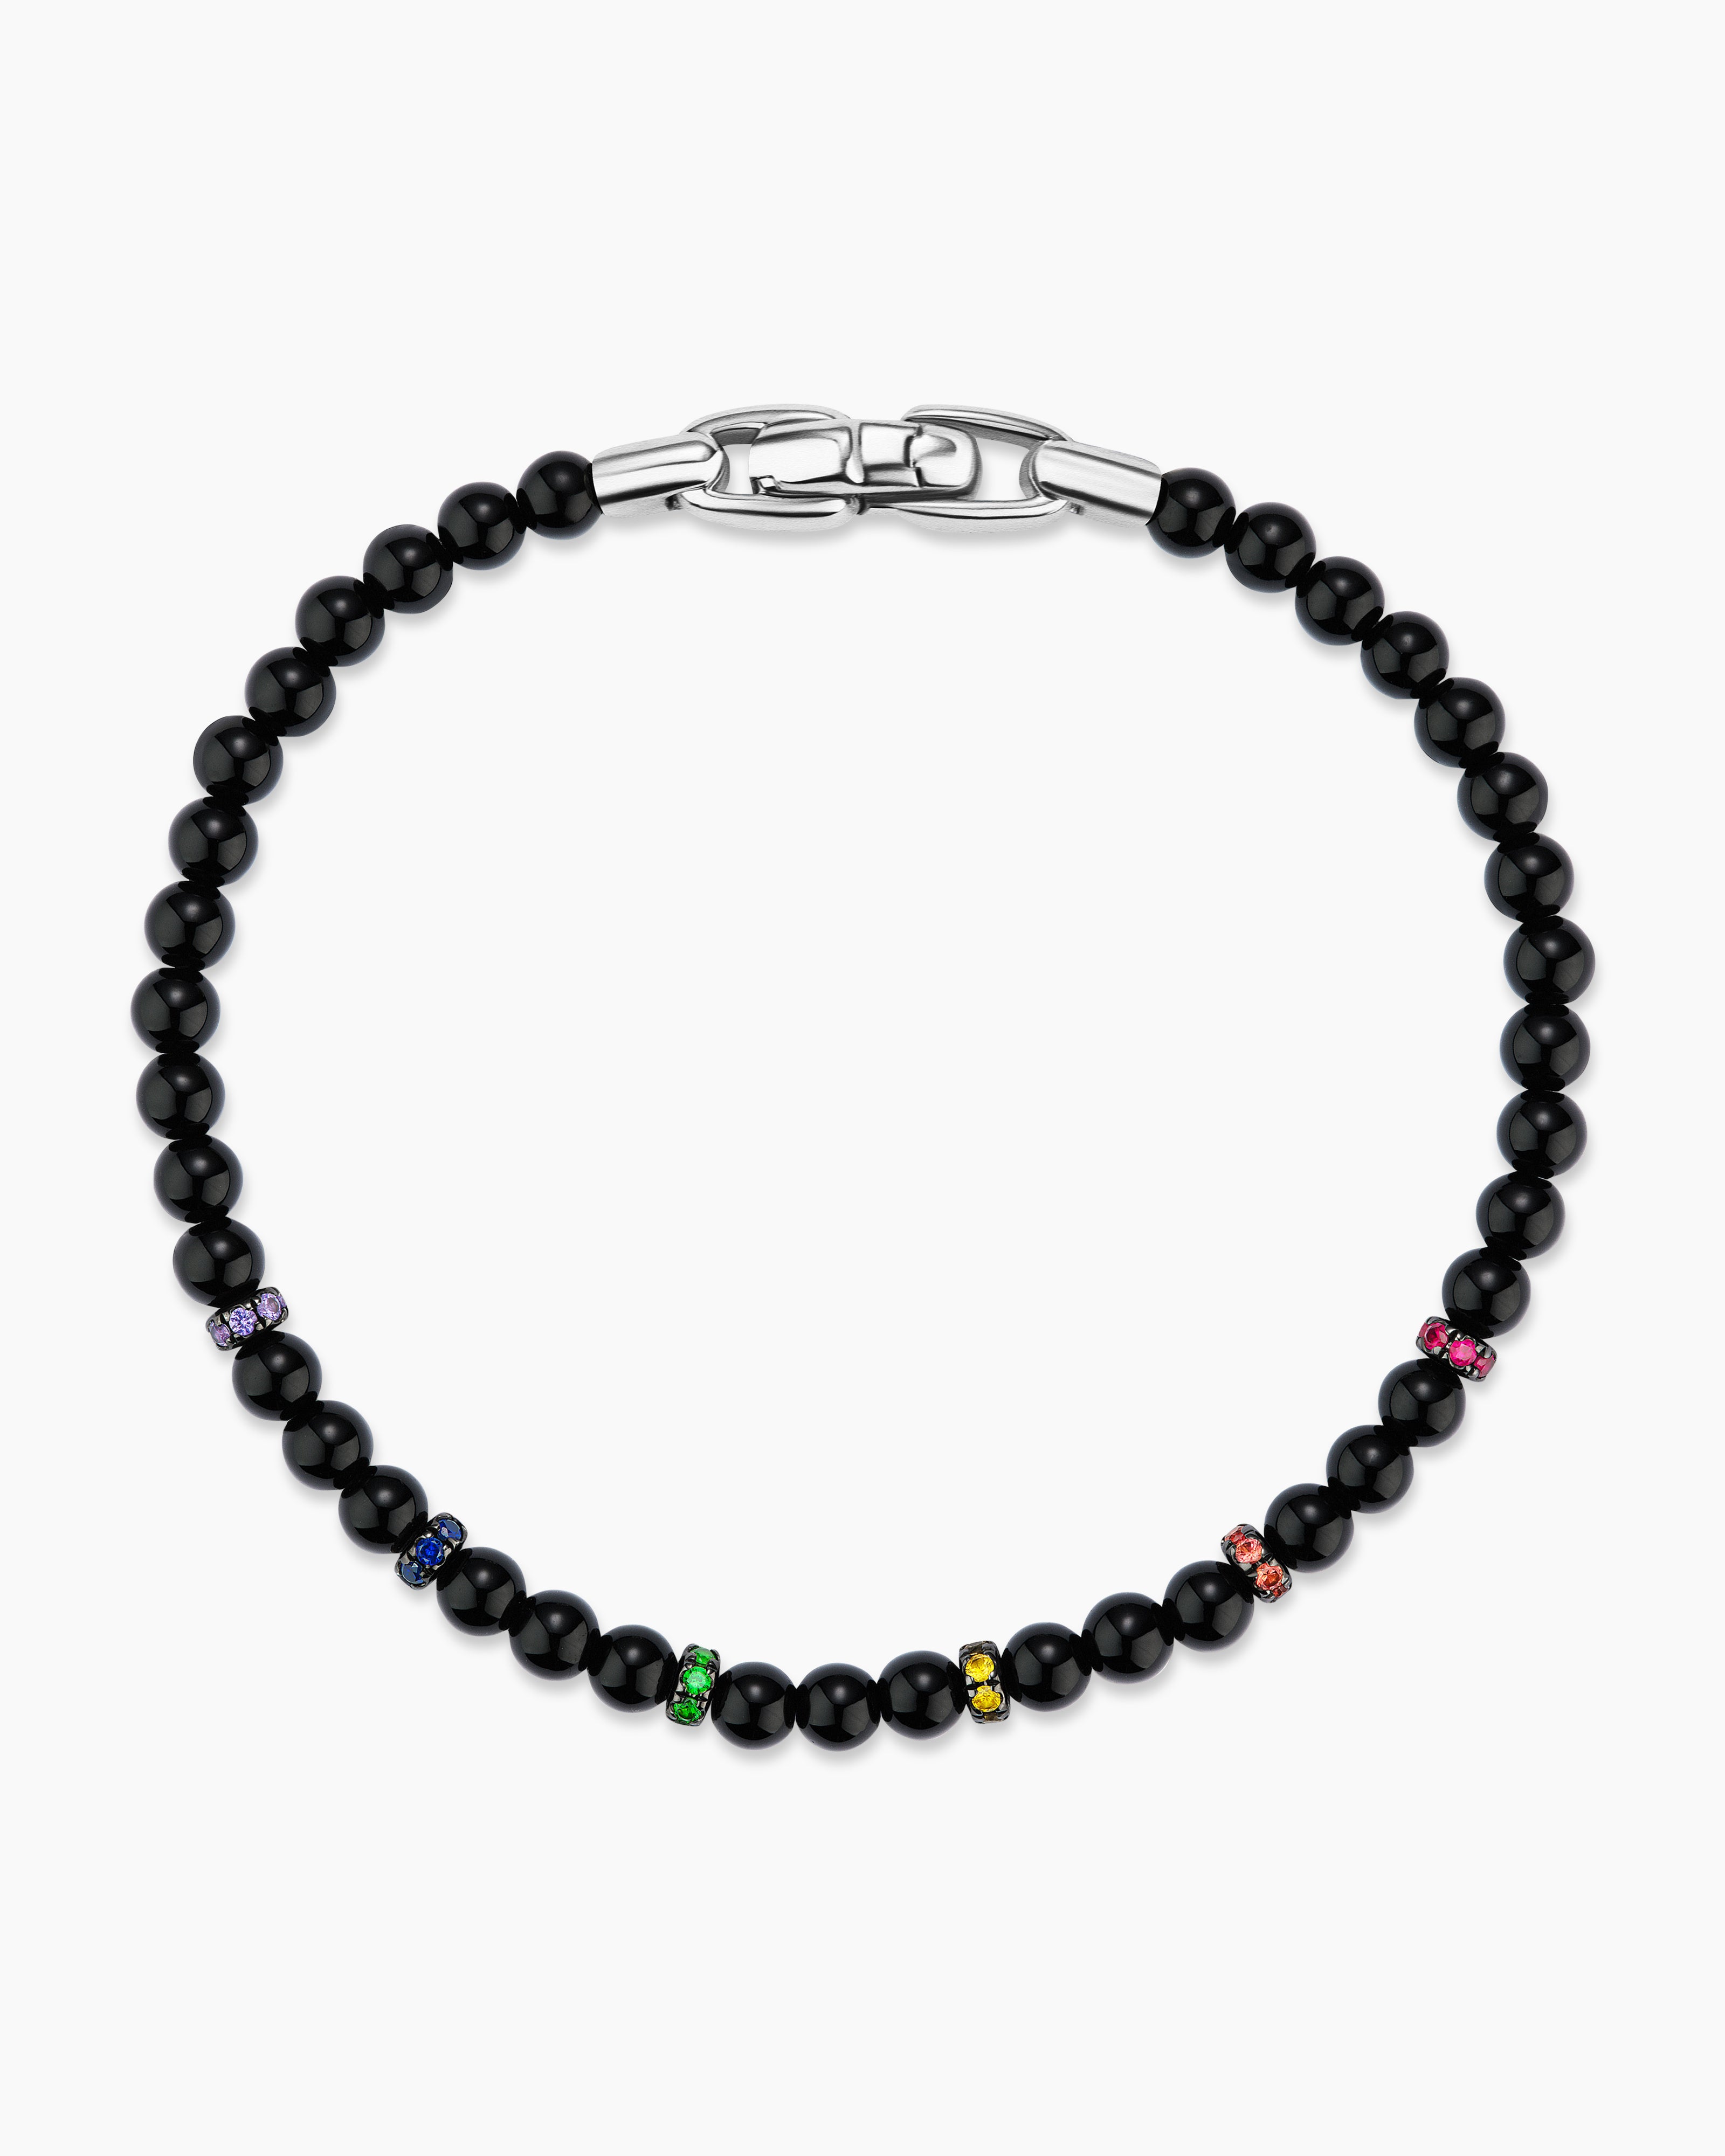 Bijoux Spiritual Beads Rainbow Bracelet in Sterling Silver, 4mm